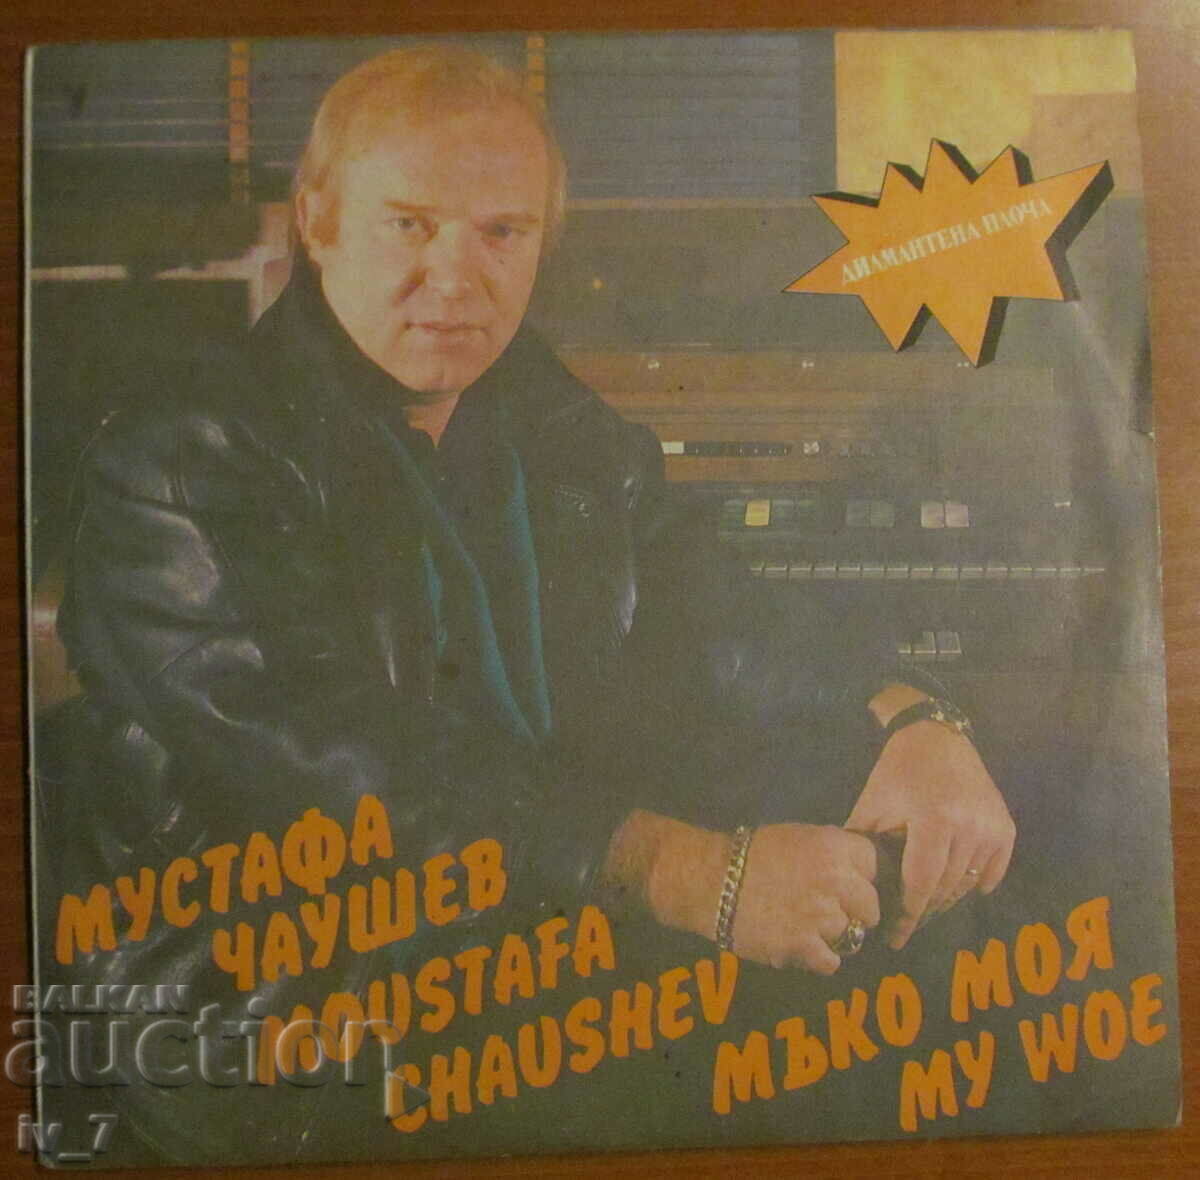 RECORD - MUSTAFA CHAUSHEV - MY SOFT, μεγάλου σχήματος